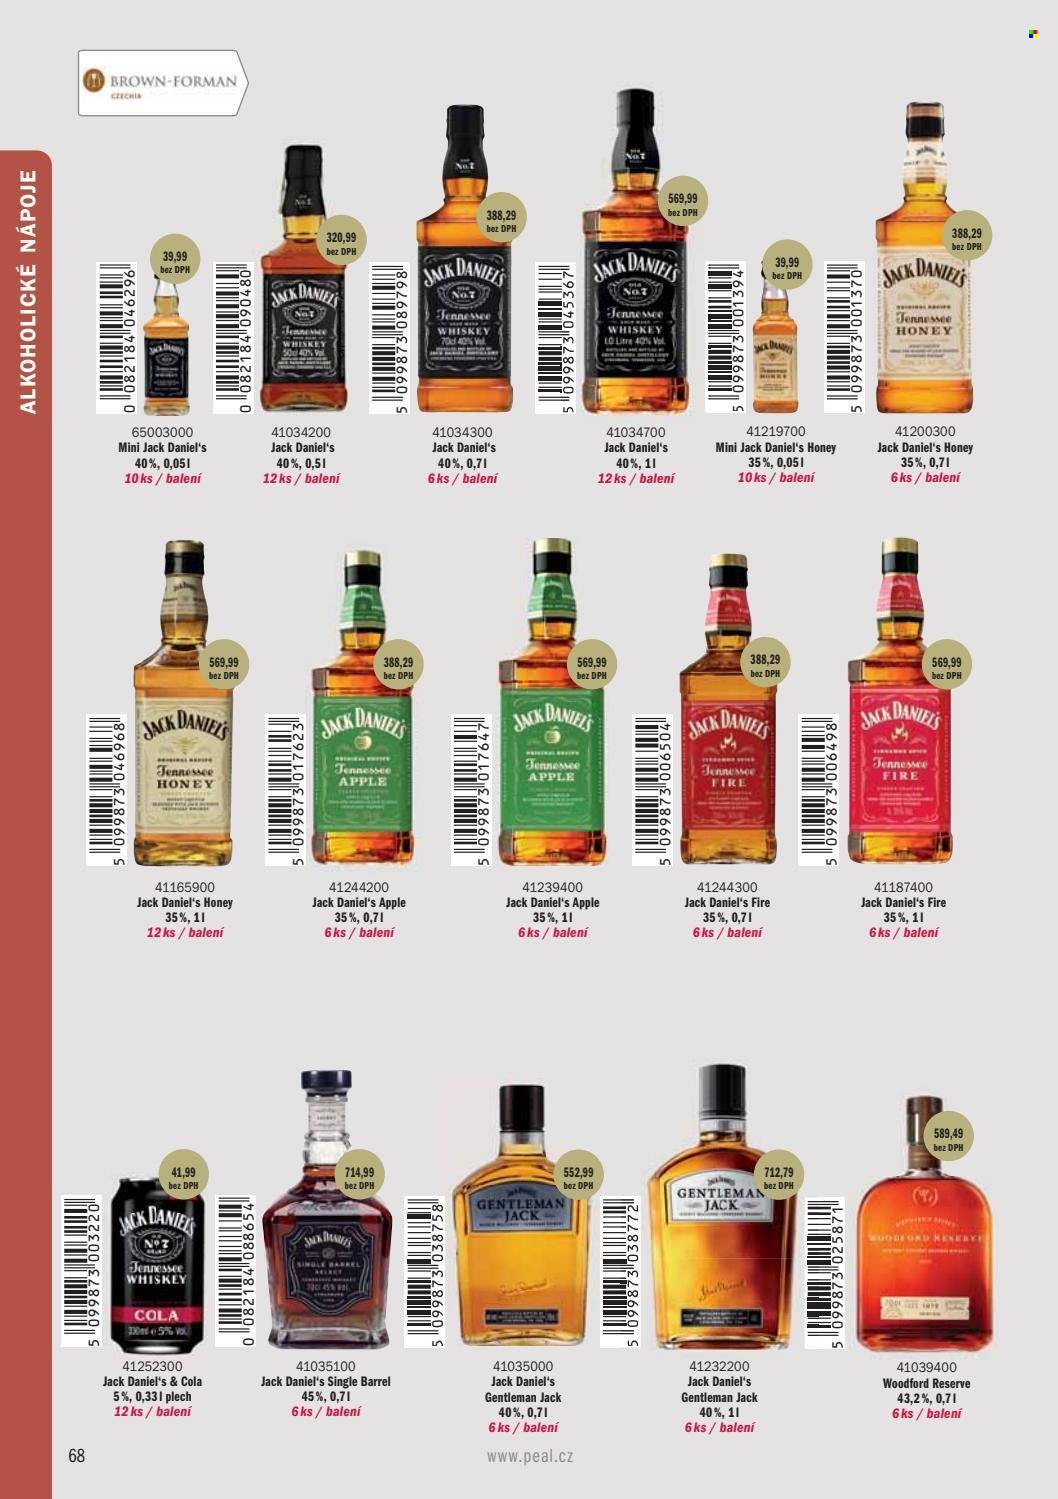 thumbnail - Leták PEAL - Produkty v akci - alkohol, whisky, Jack Daniel’s, Woodford Reserve, Gentleman Jack. Strana 70.